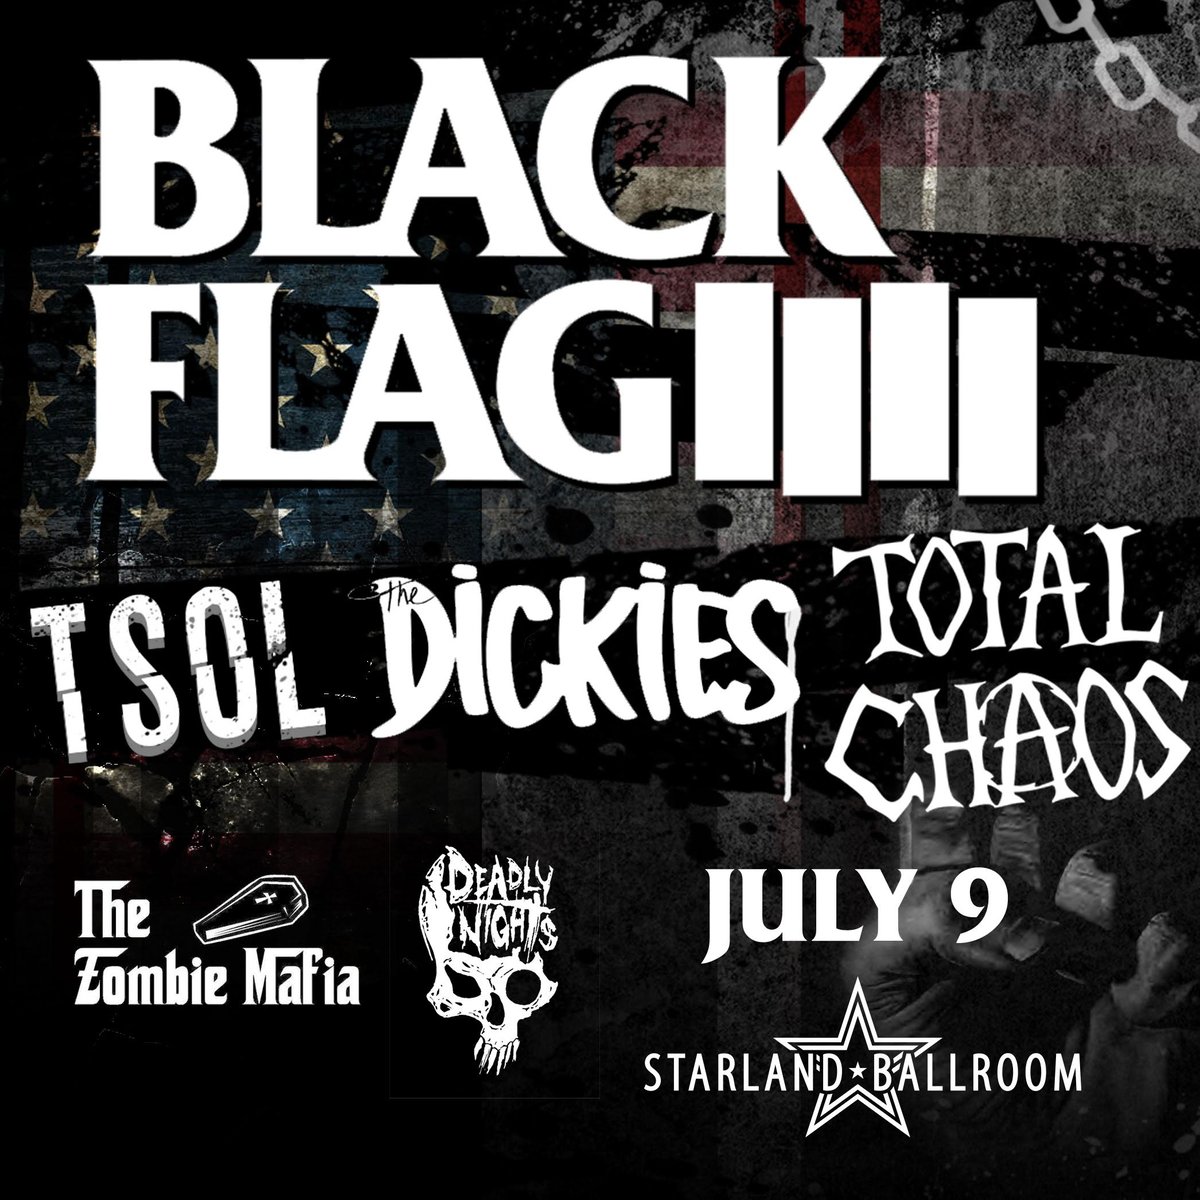 Black Flag Tickets Starland Ballroom 7/9 NO FEES Deadly Nights